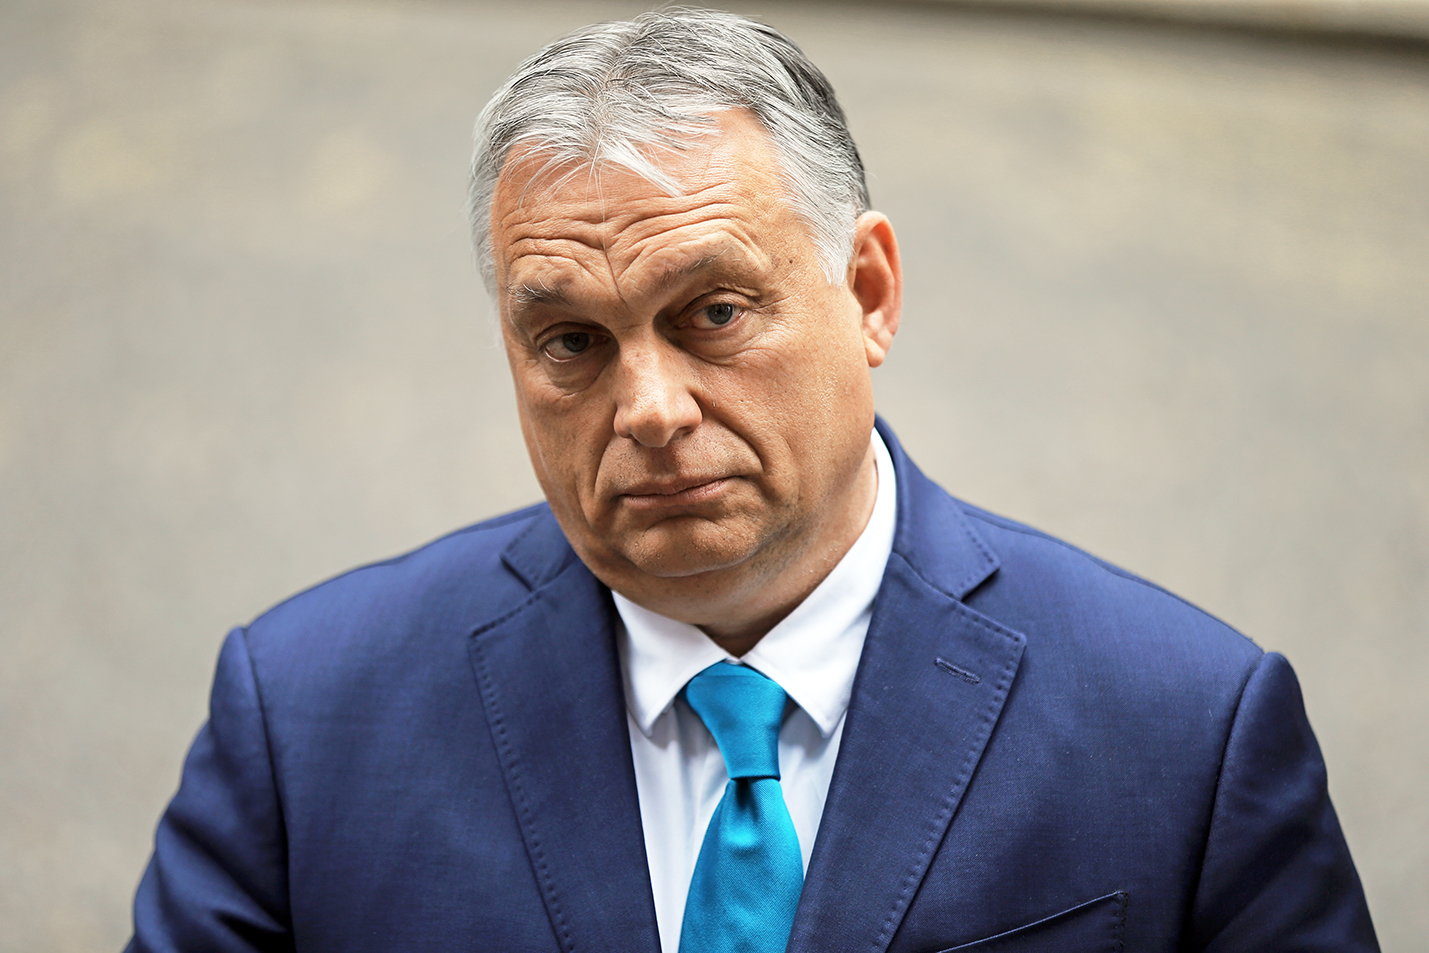 High energy prices weakening Europe, euro, Orbán says